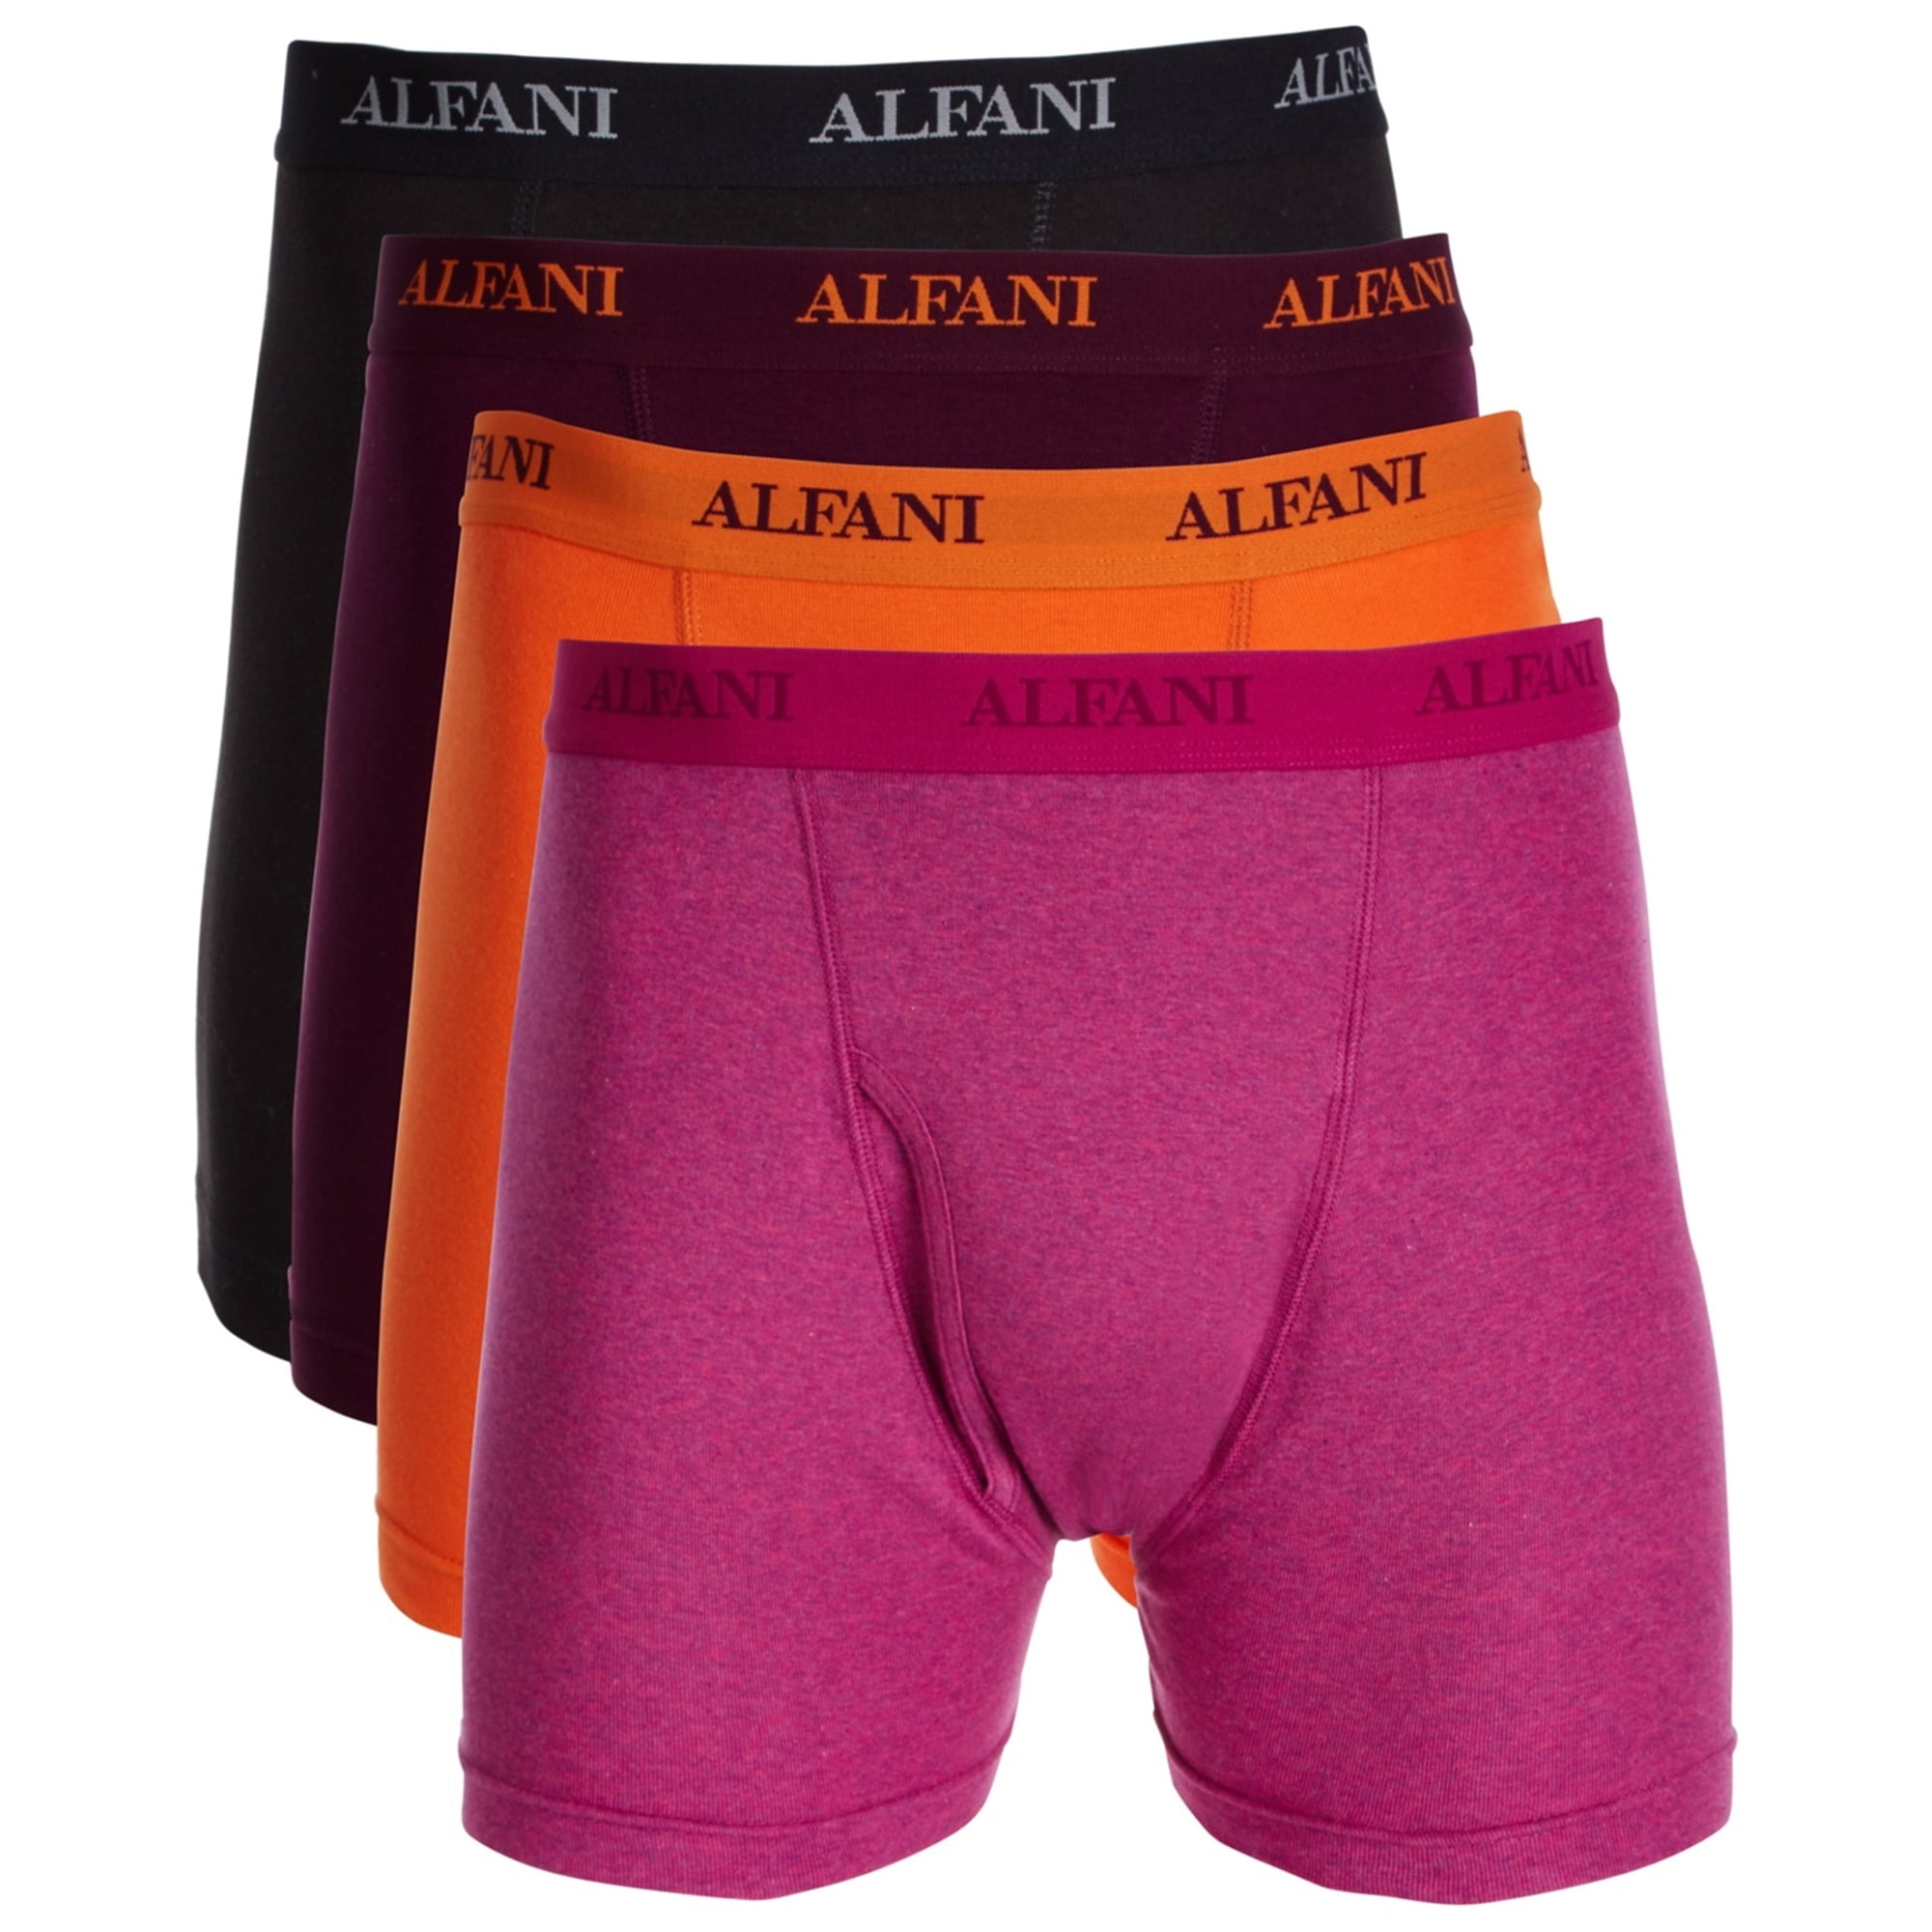 Alfani Mens woven boxers combed cotton multi colors 3 Pack S 